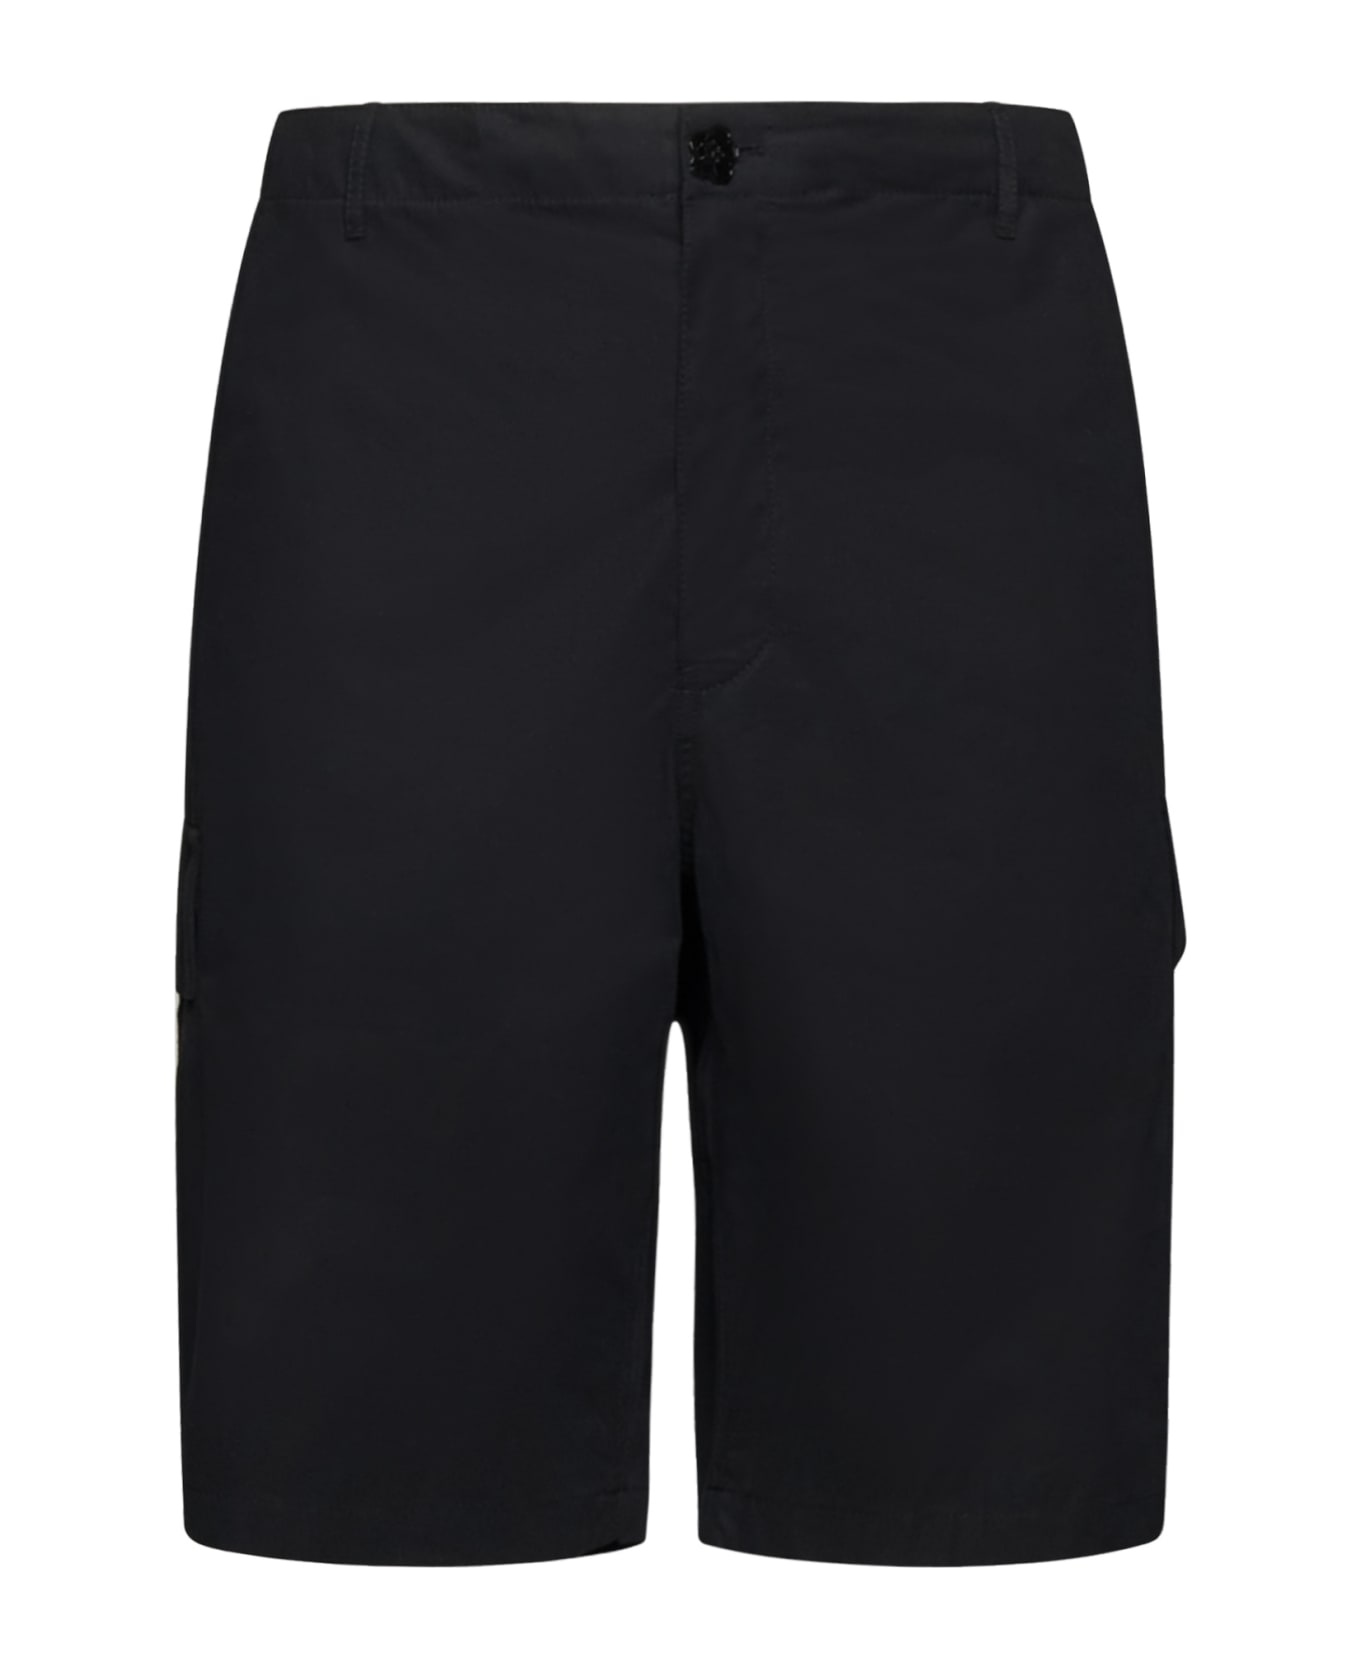 Kenzo Shorts - Black